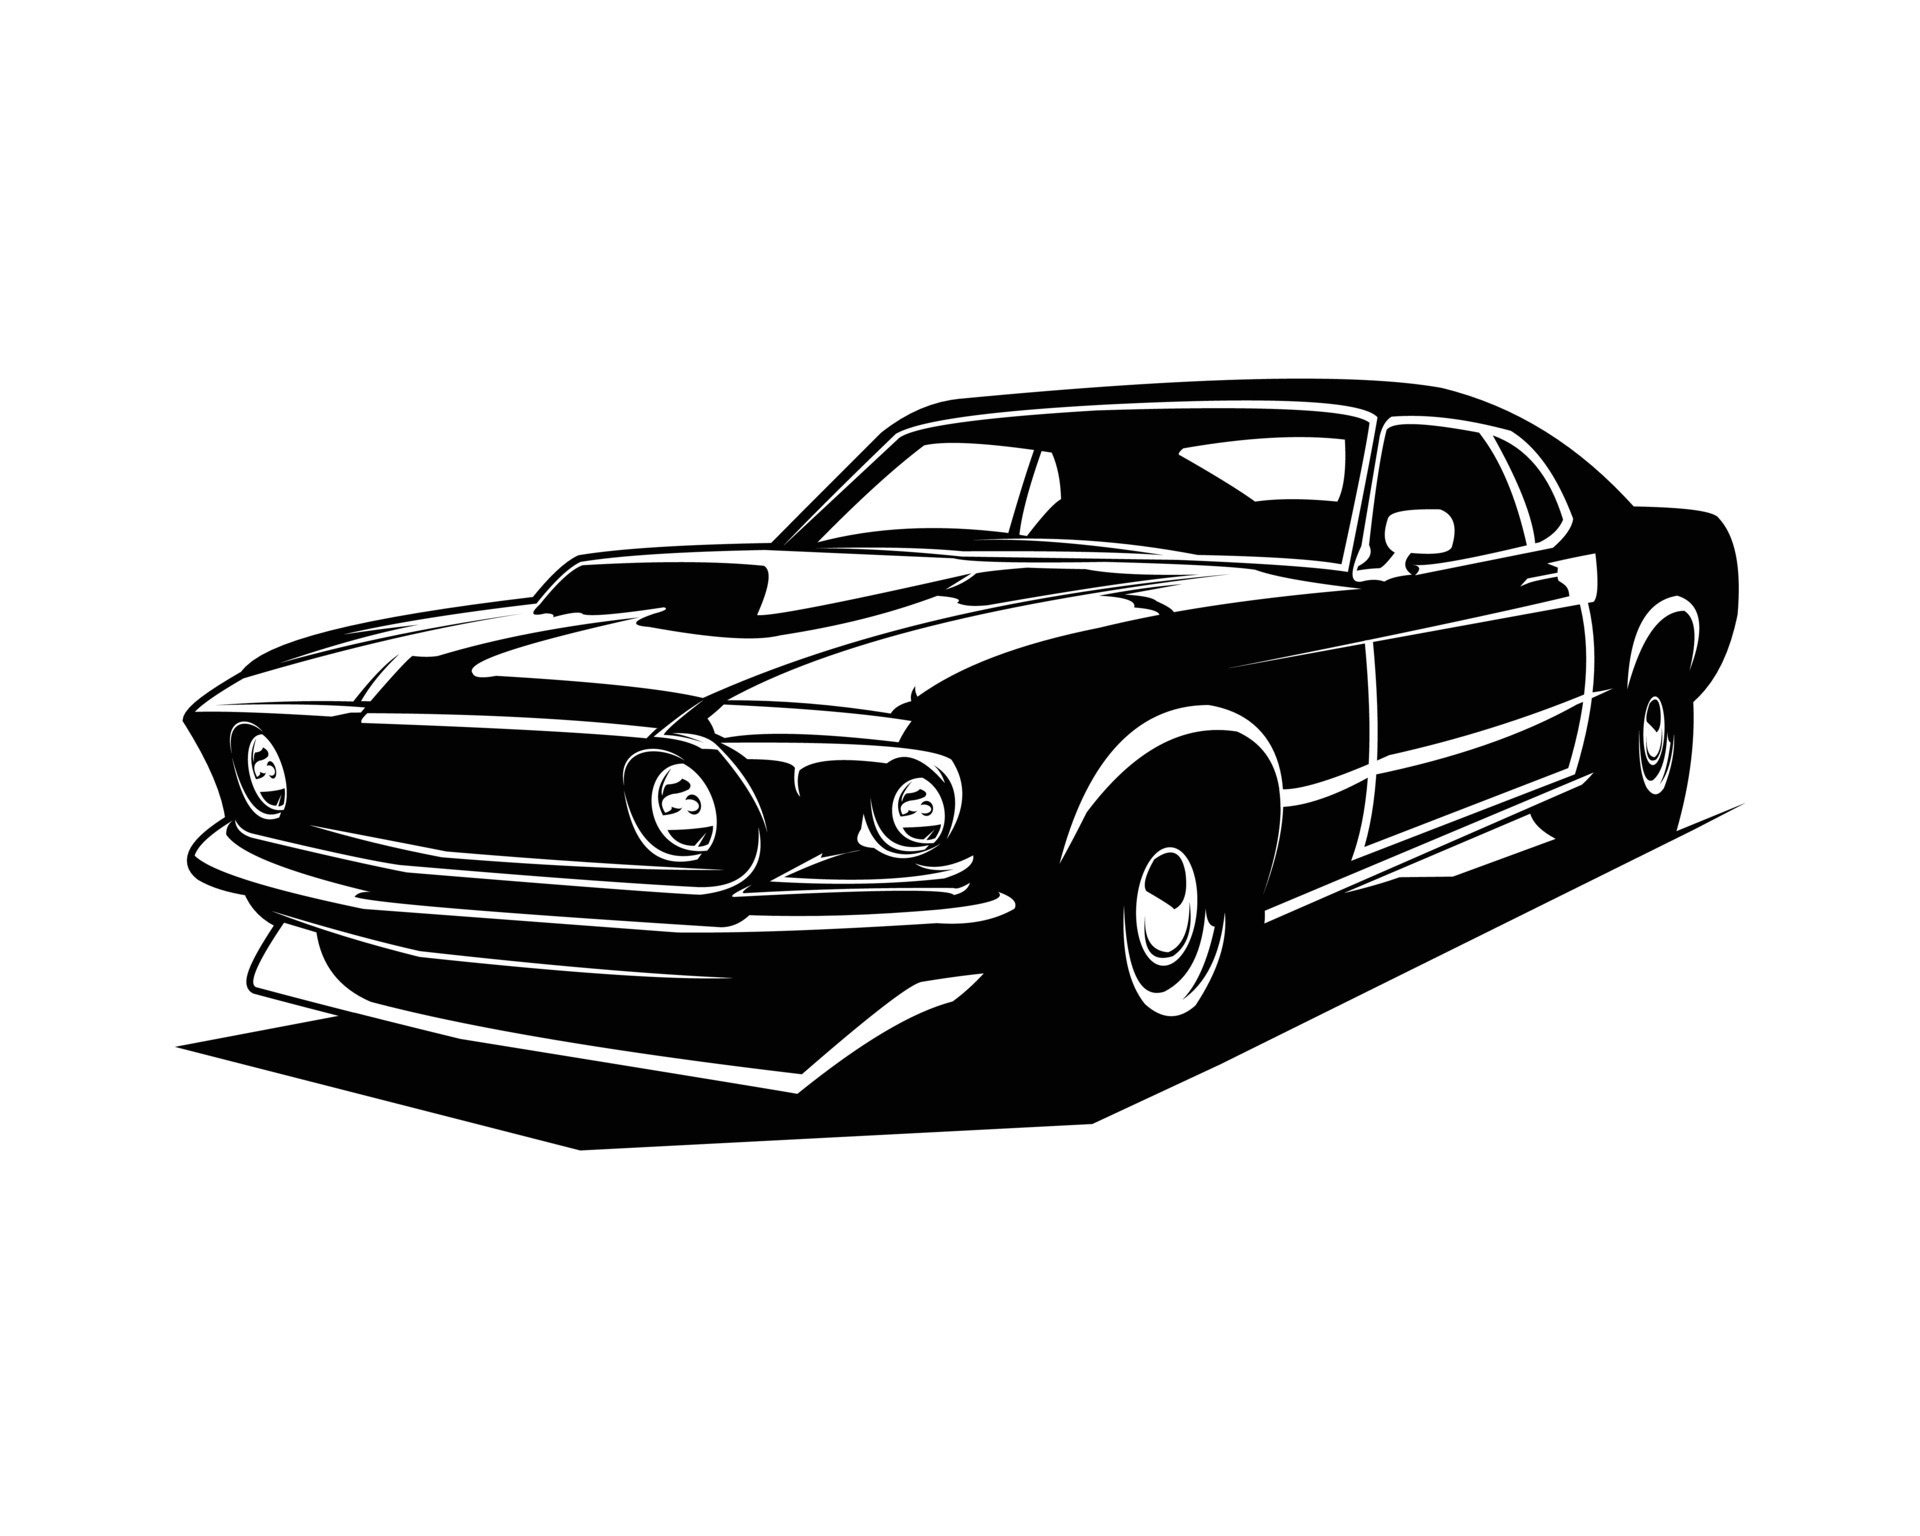 Ford logo, Ford emblem on a black background, Ford, automobile